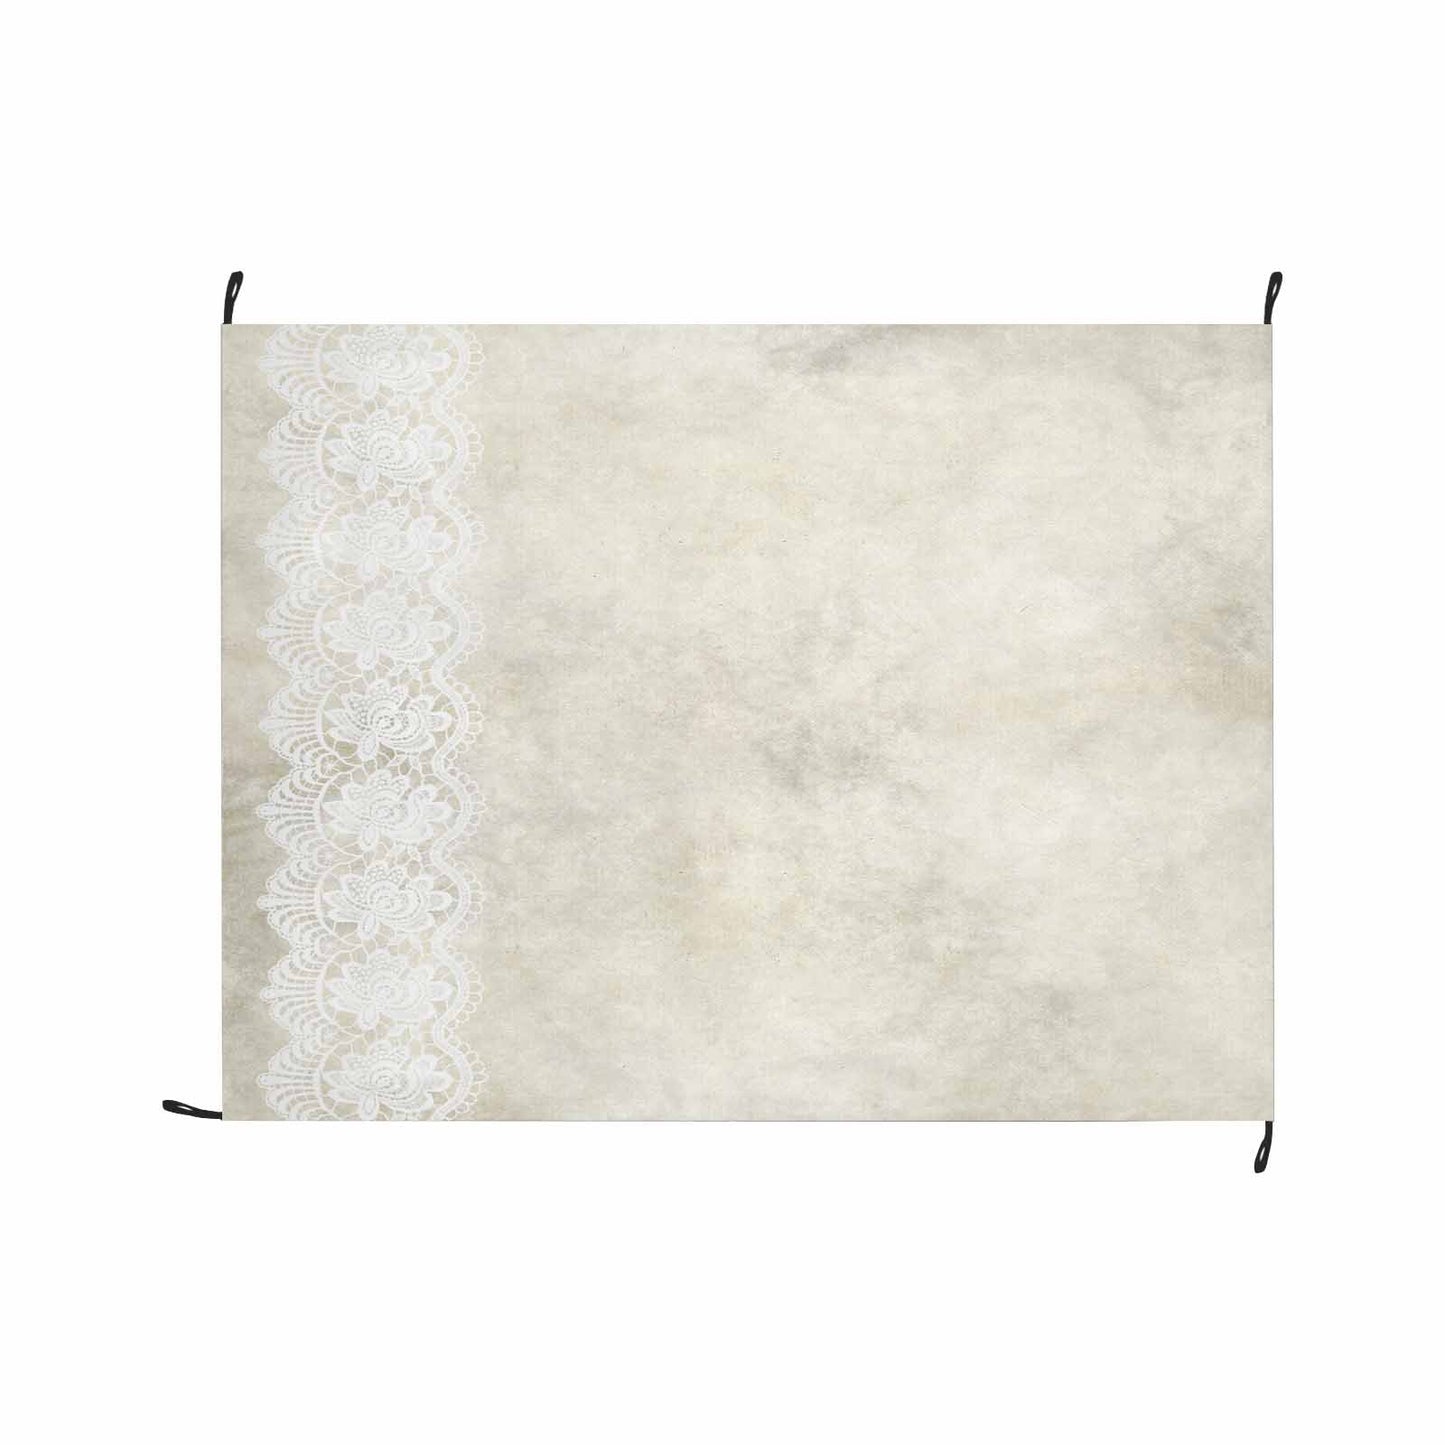 Victorian lace print waterproof picnic mat, 69 x 55in, design 27